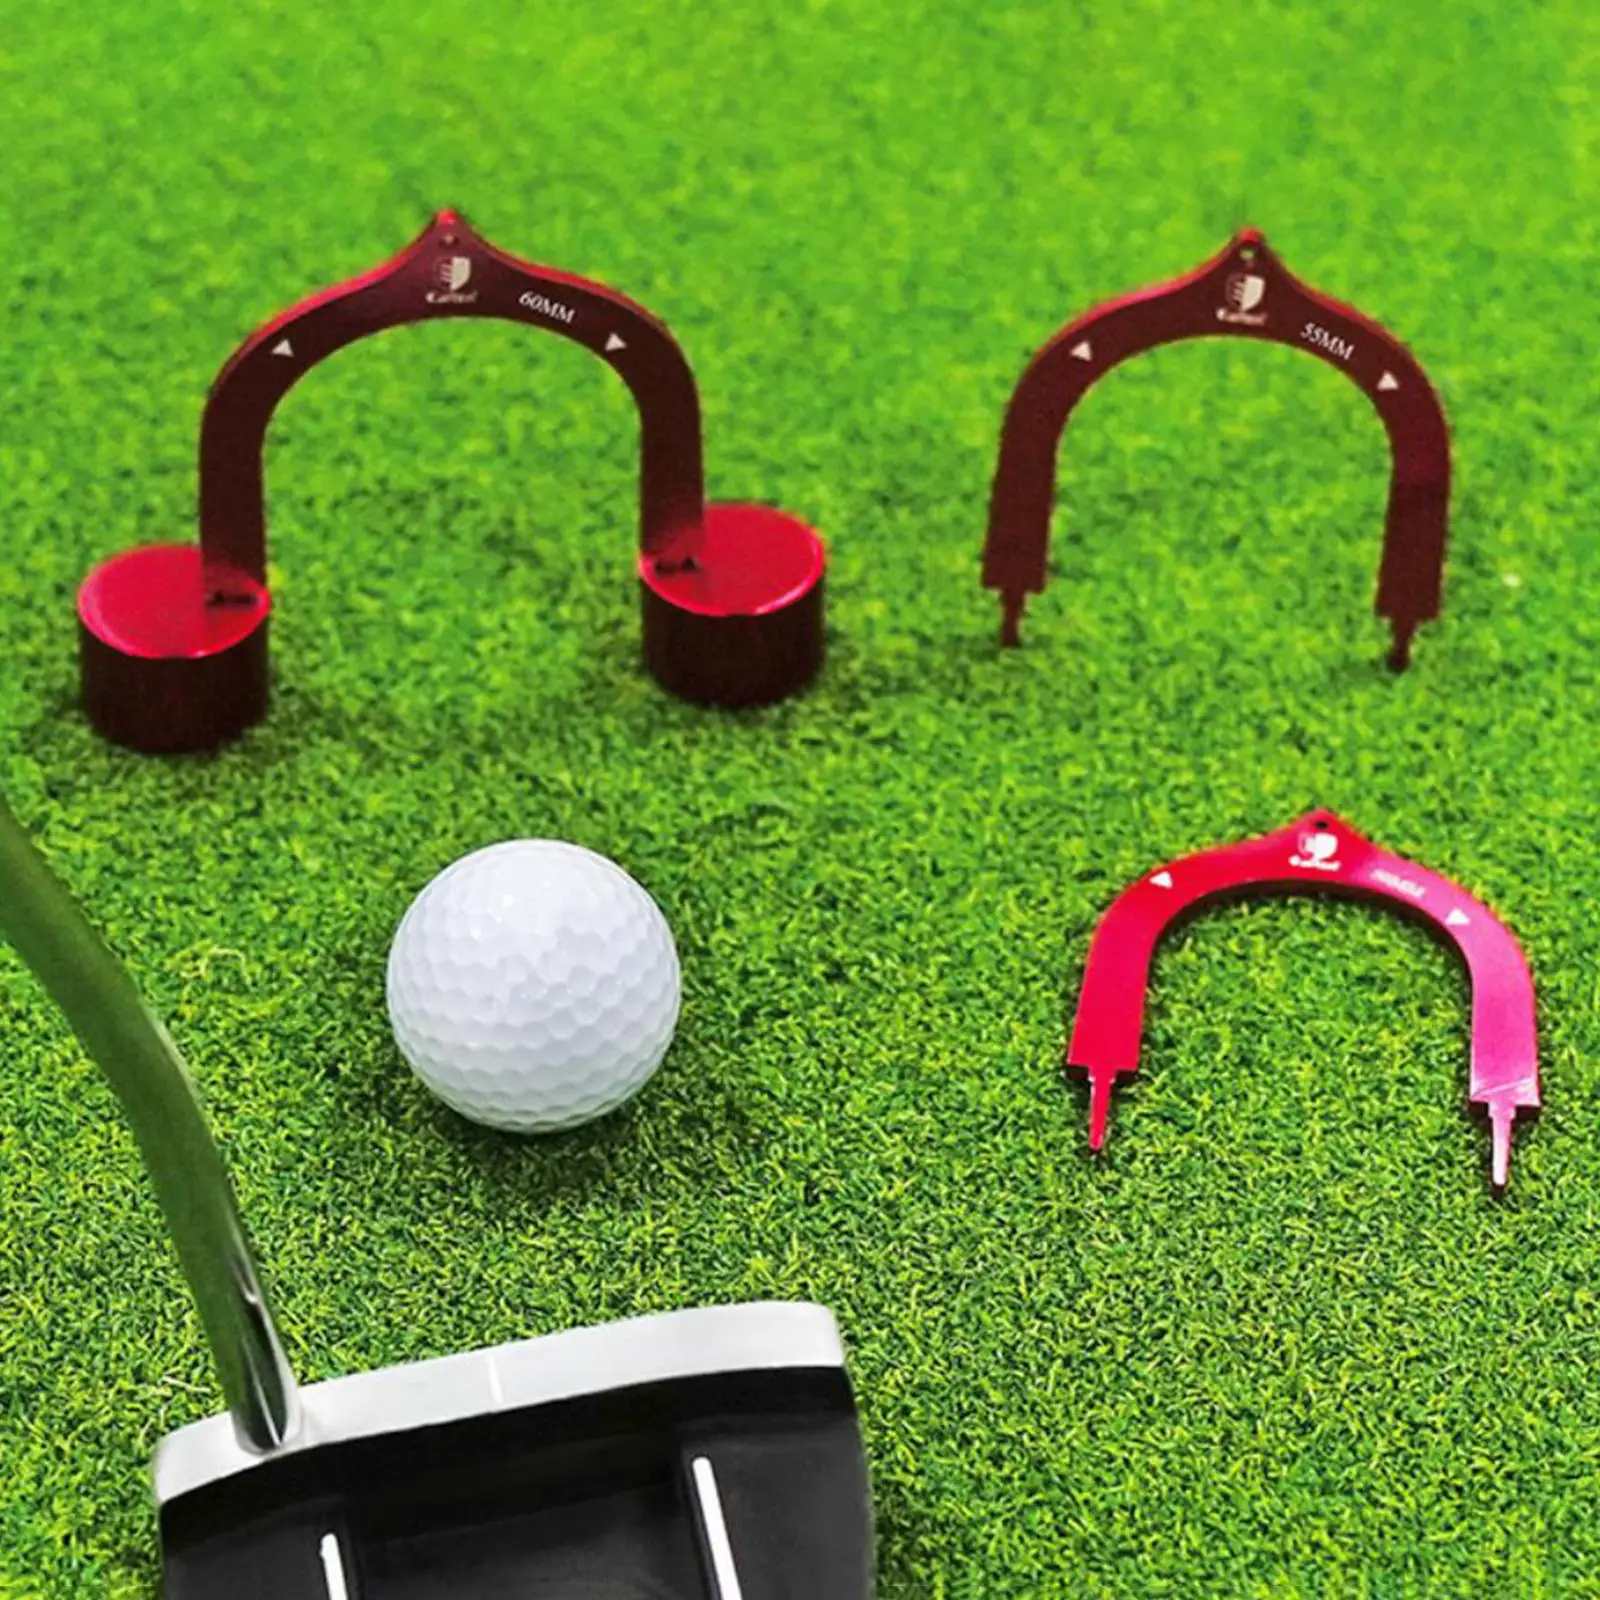 3x Golf Putting Gates Portable Putt Gates Practice Supplies Golf Accessories